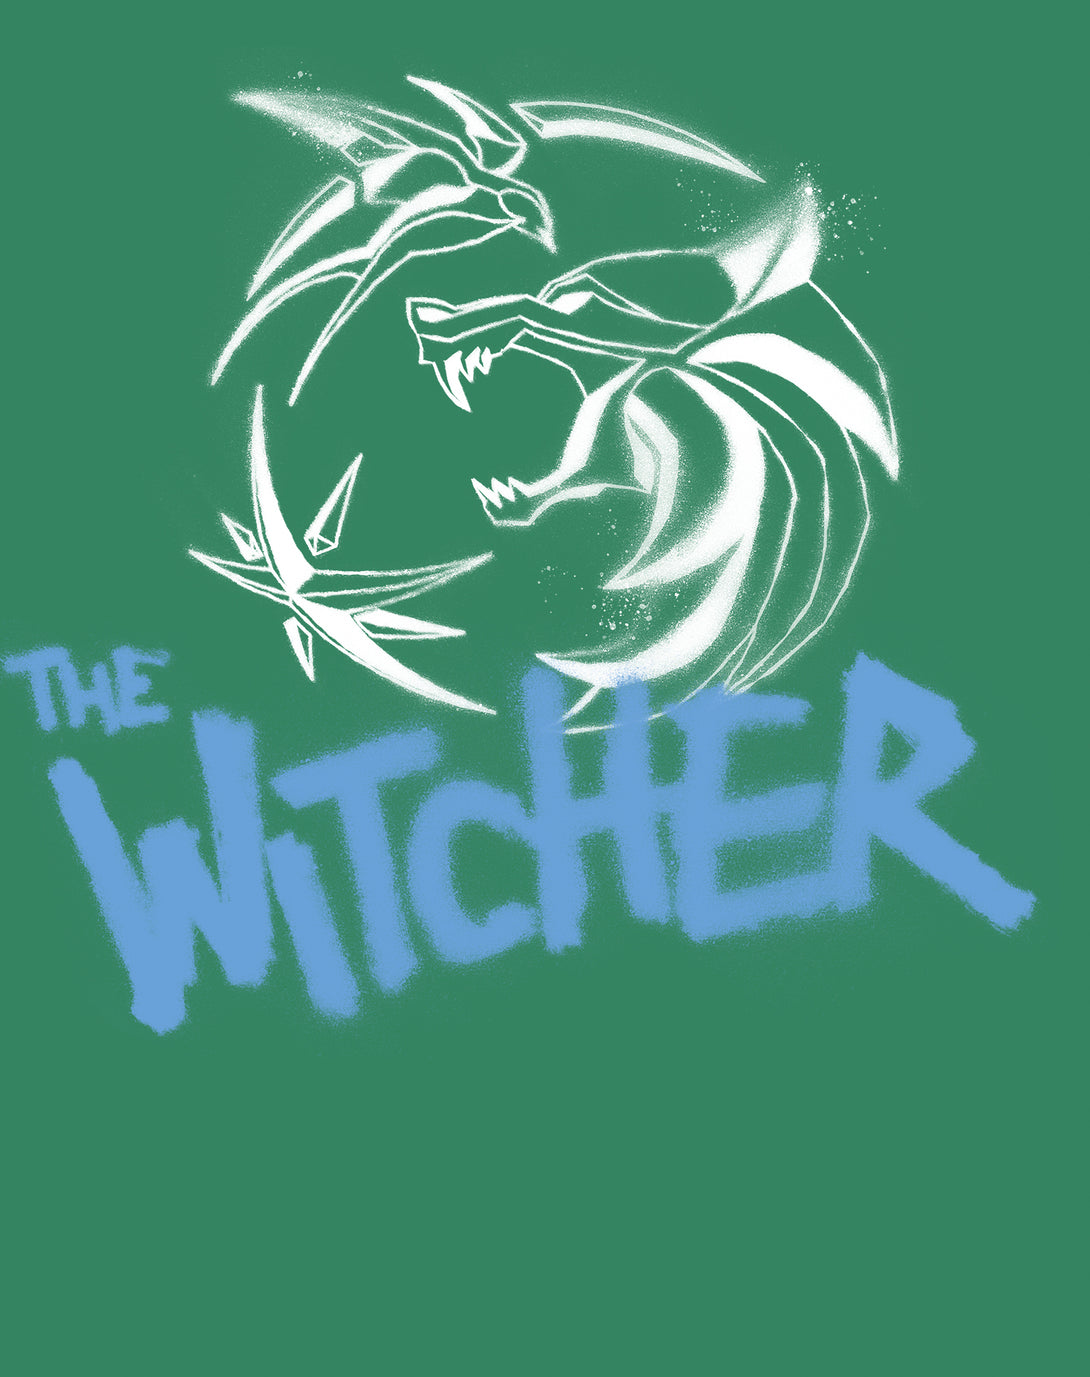 The Witcher Logo Stencil Slayer Official Women's T-Shirt Green - Urban Species Design Close Up